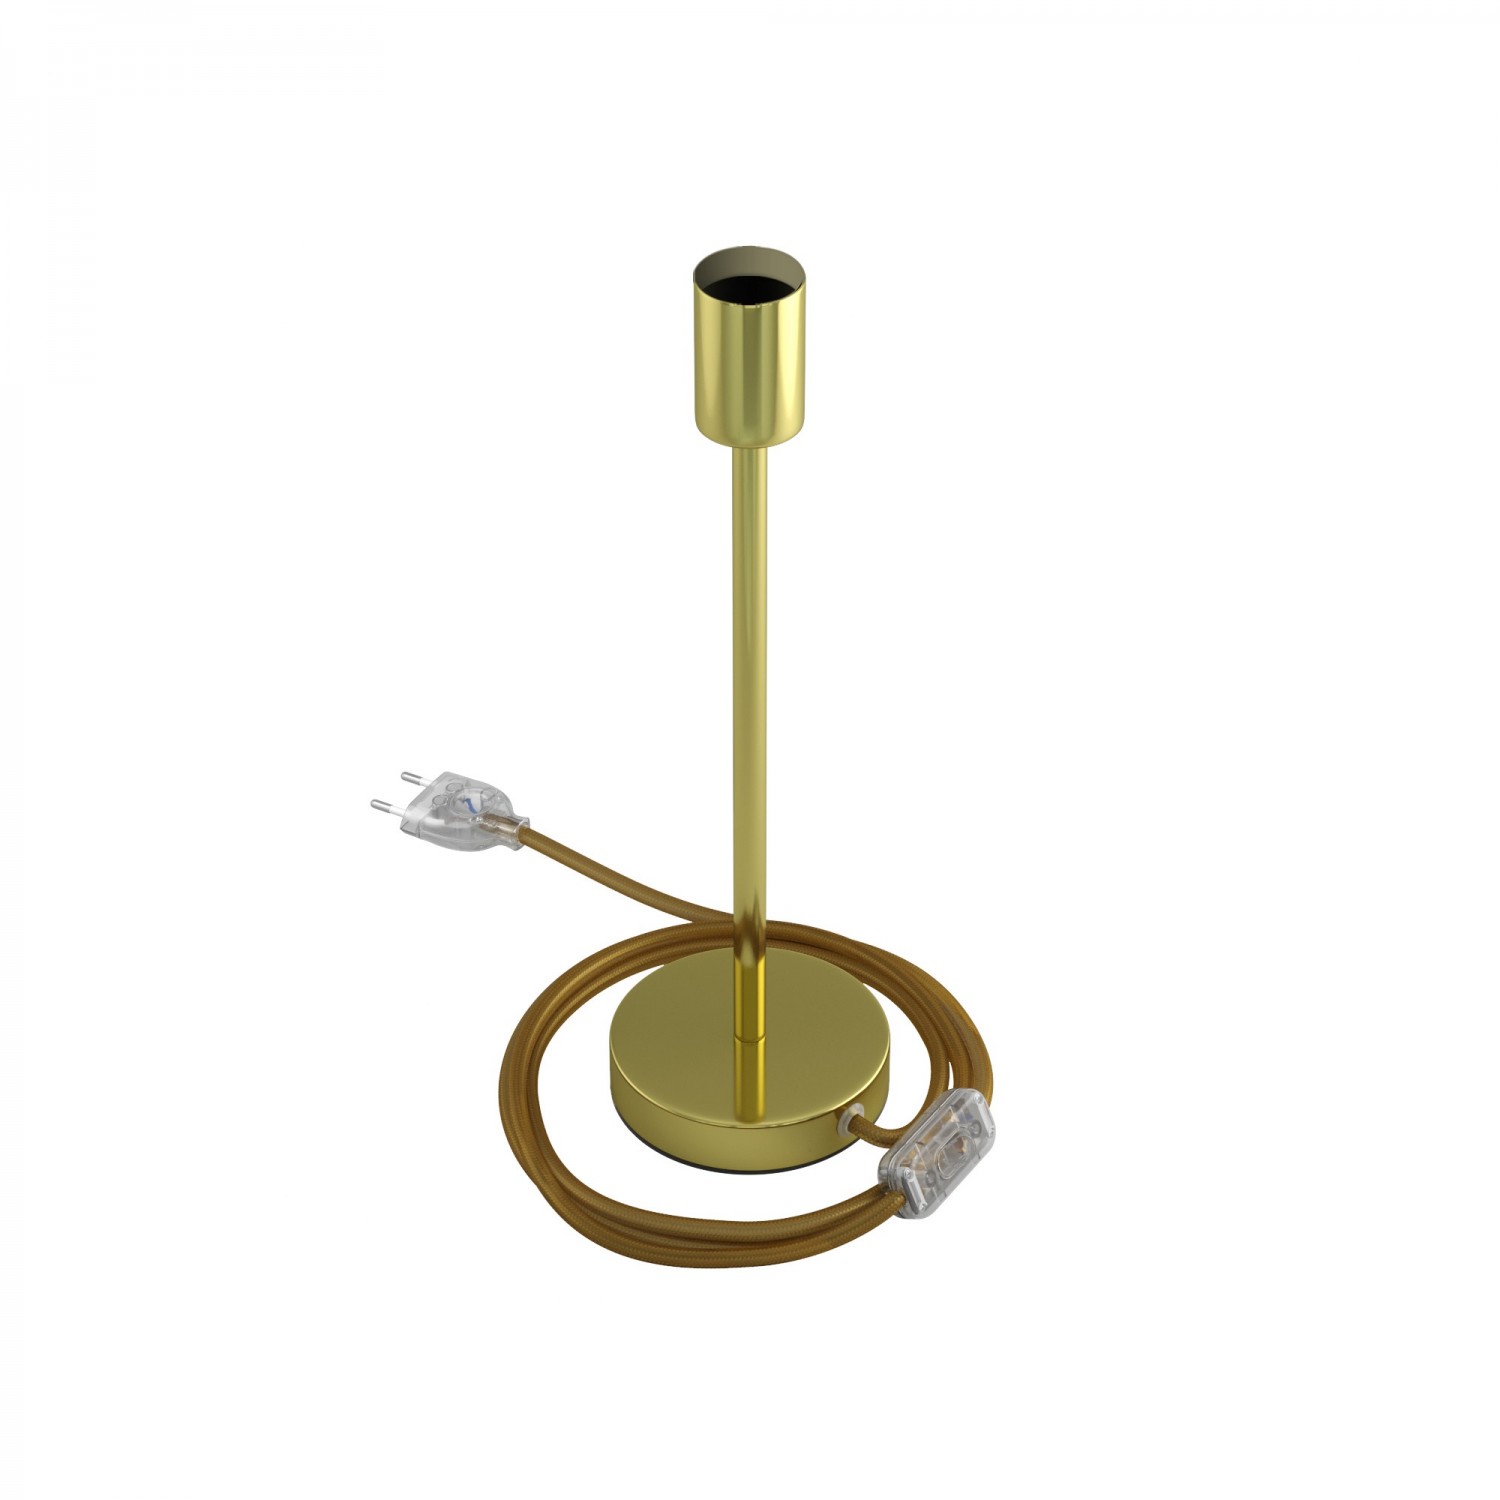 Alzaluce - Lámpara de mesa de metal con clavija de 2 polos